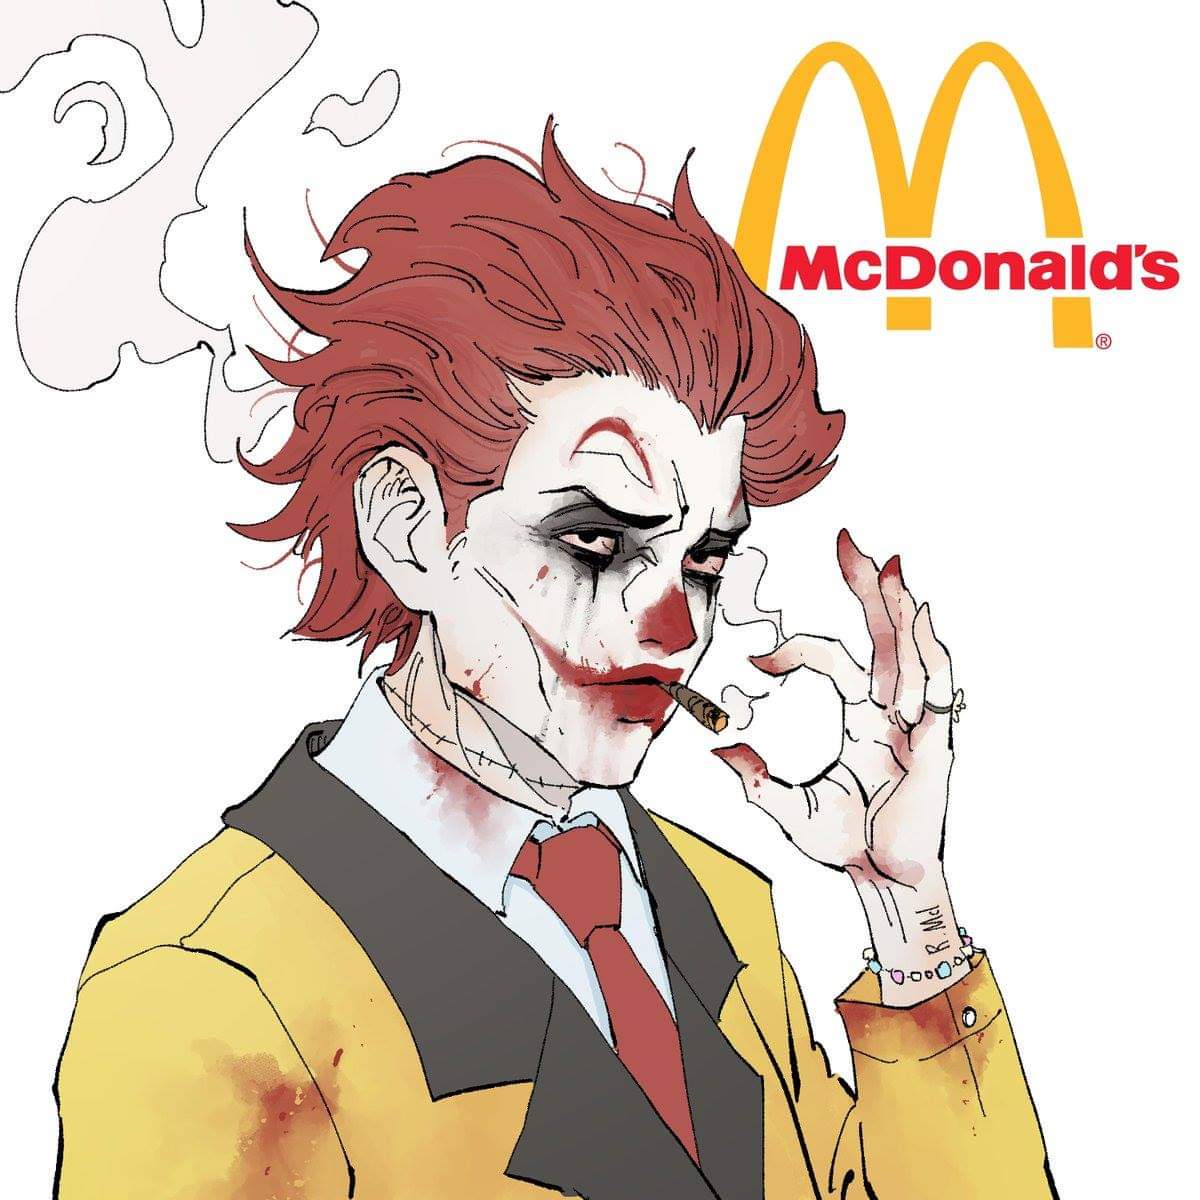 if fast food mascots were super villains - McDonald's x 10.oooop